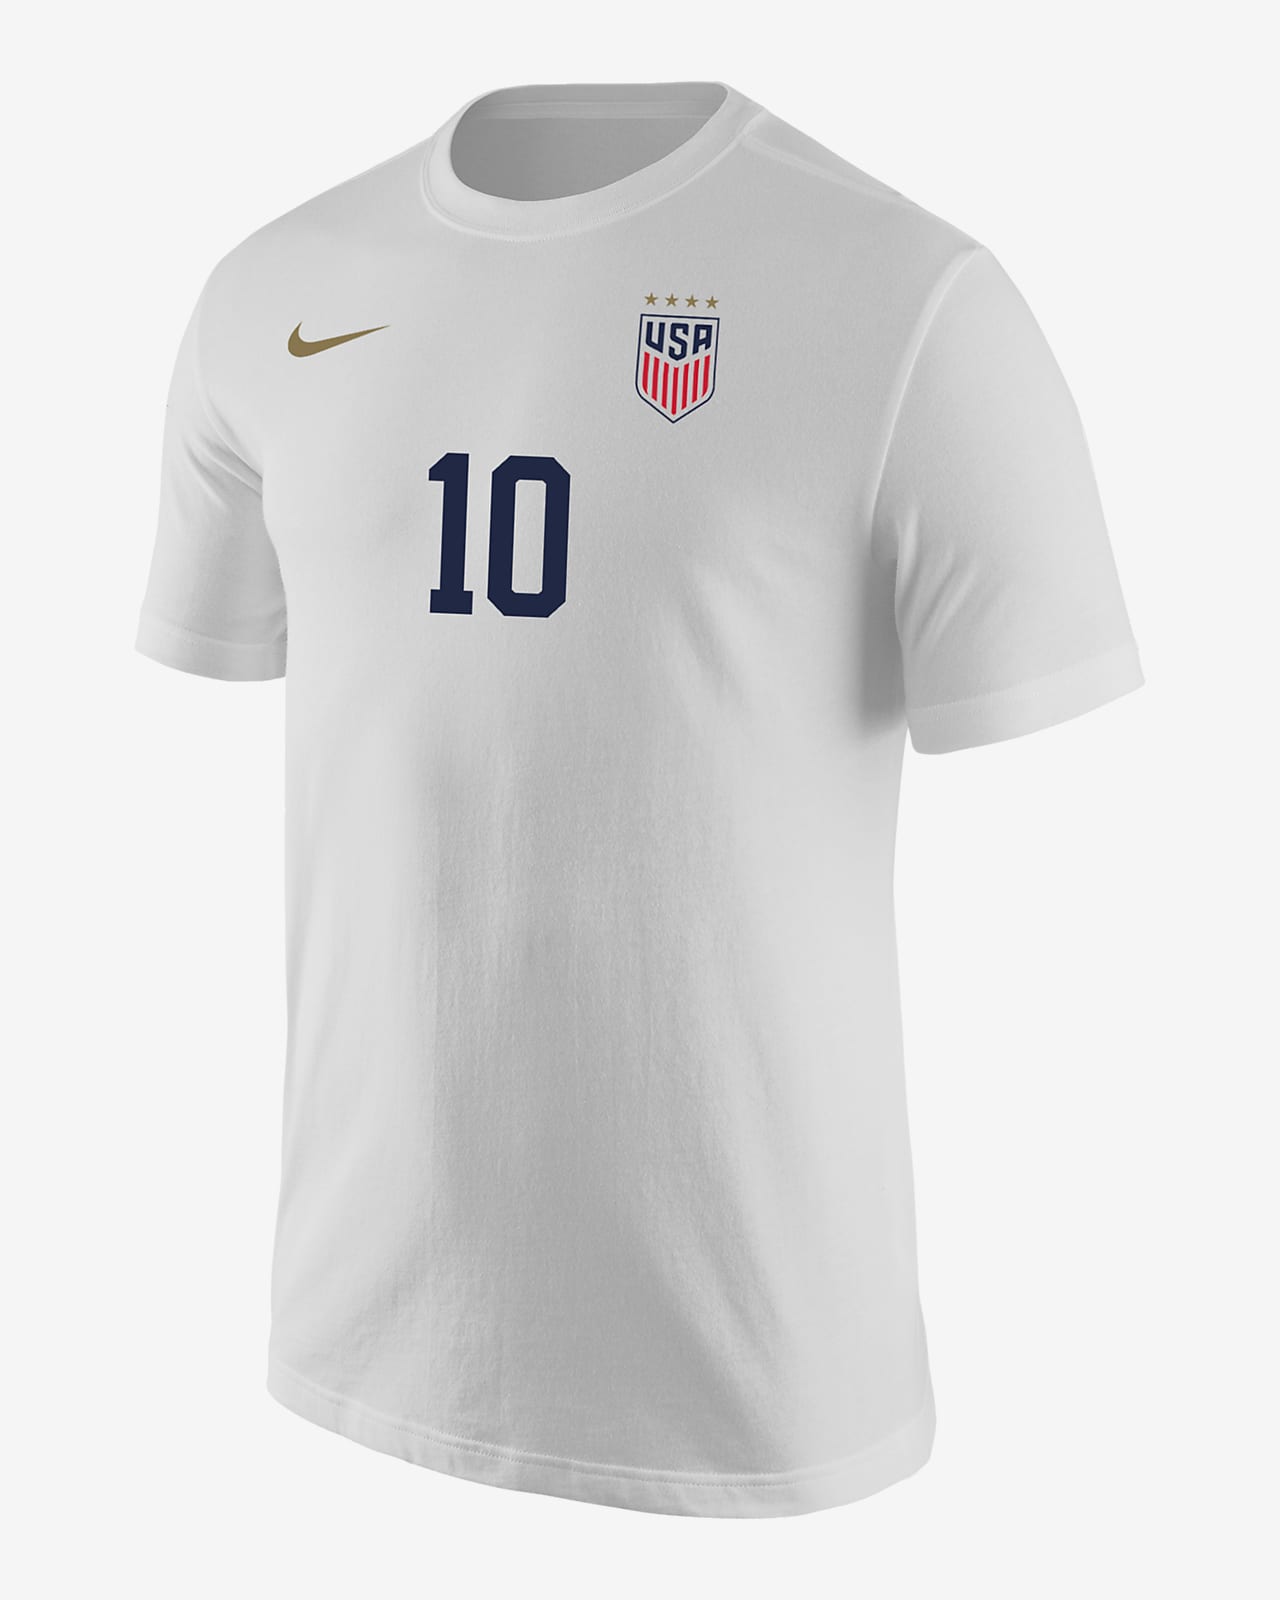 Lindsey Horan USWNT Men's Nike Soccer T-Shirt